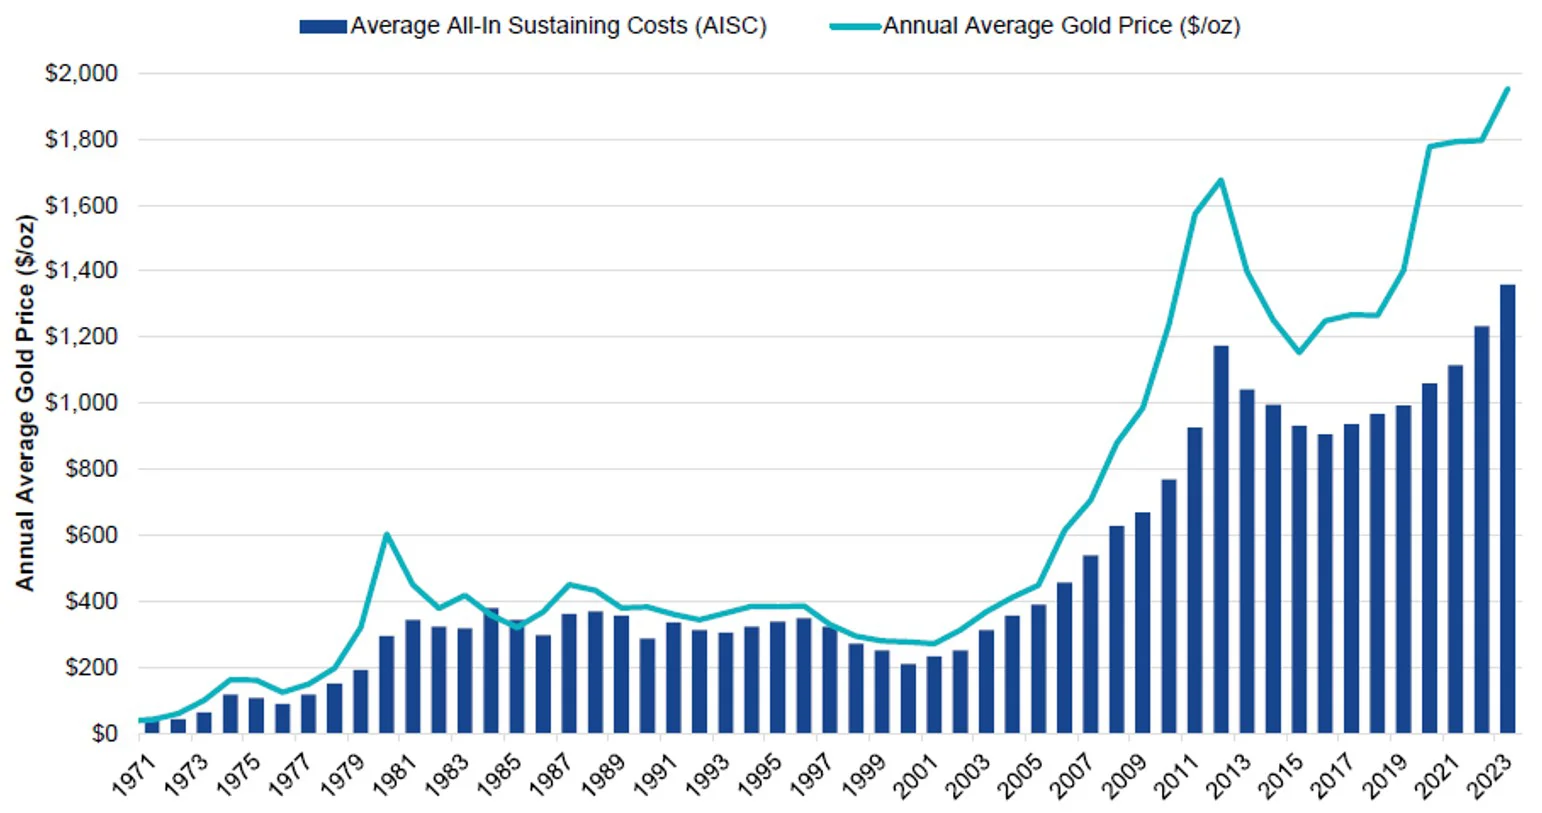 Average all-in sustaining costs* versus average annual gold price (US dollars/oz)